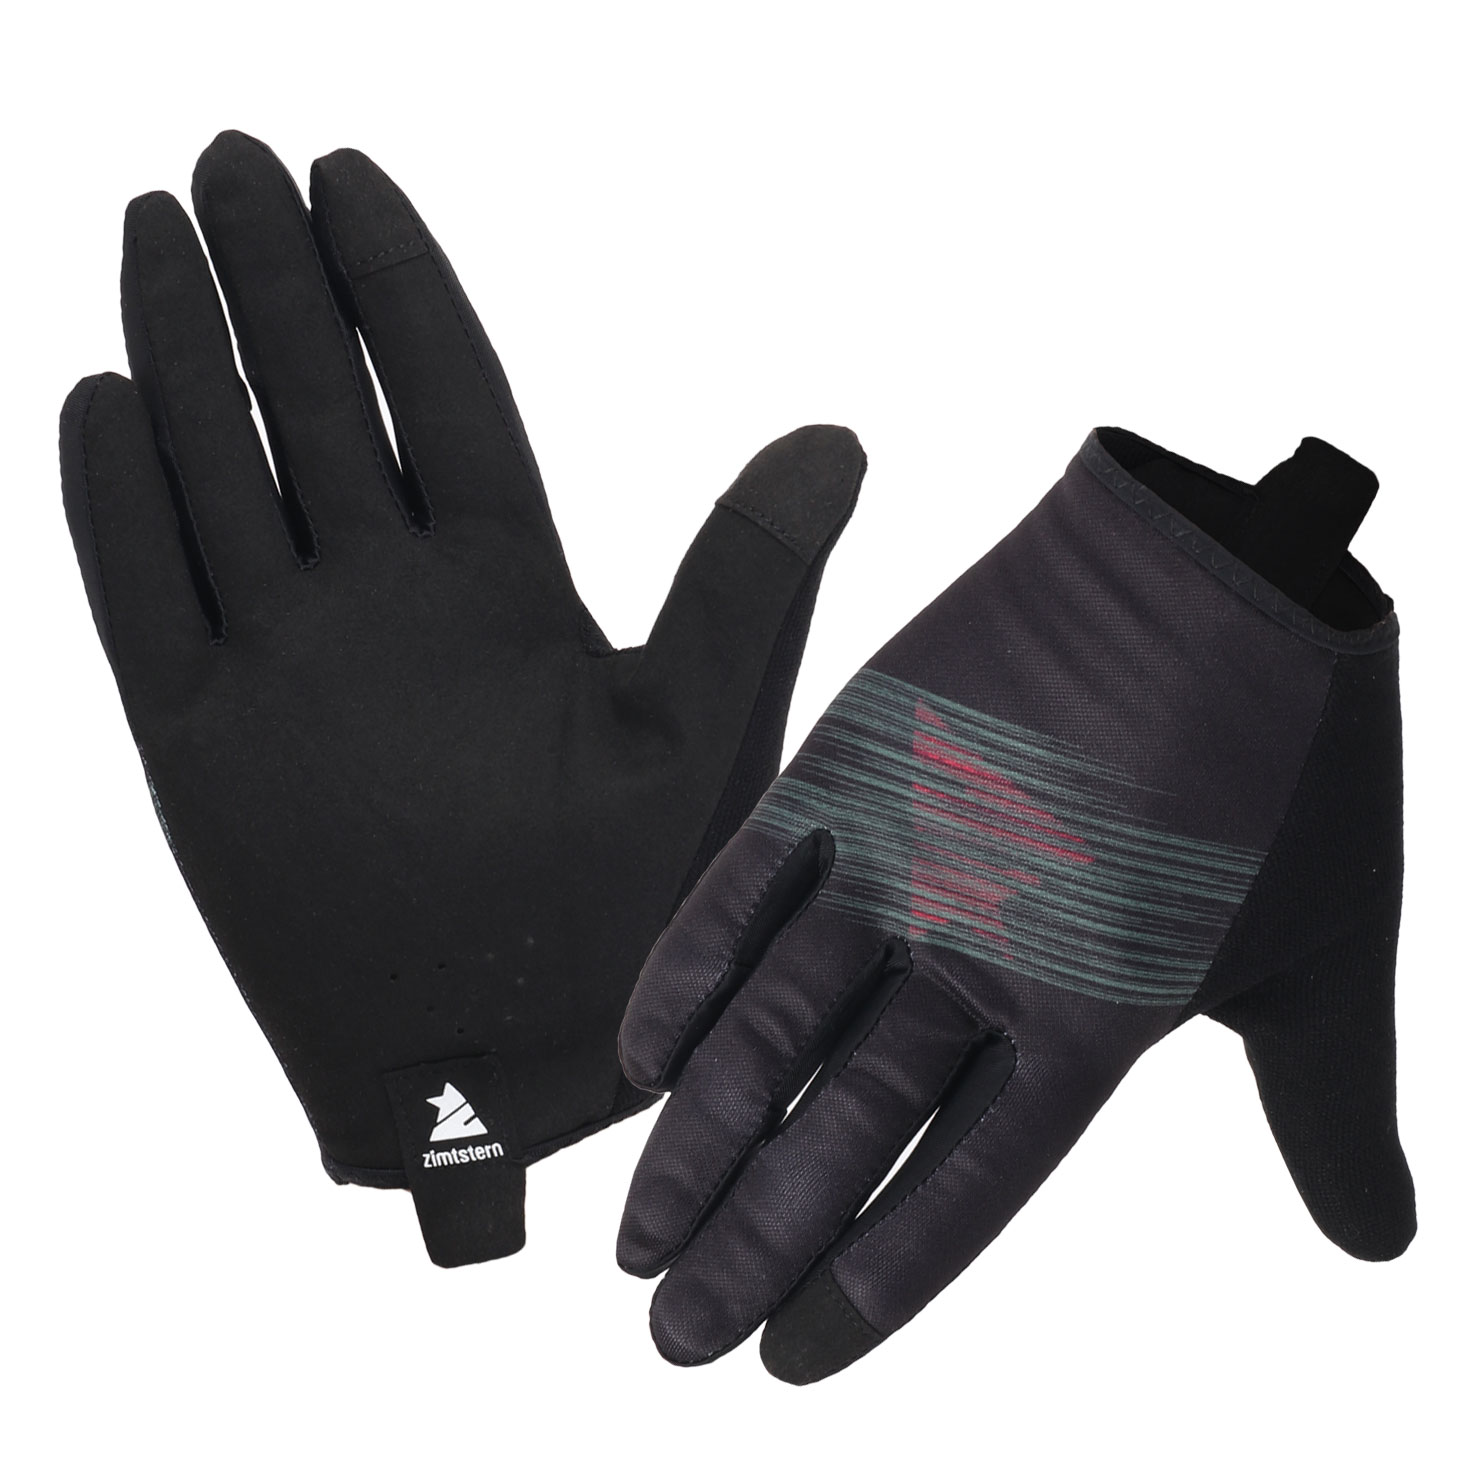 Picture of Zimtstern Flowz MTB Gloves - Pirate Black